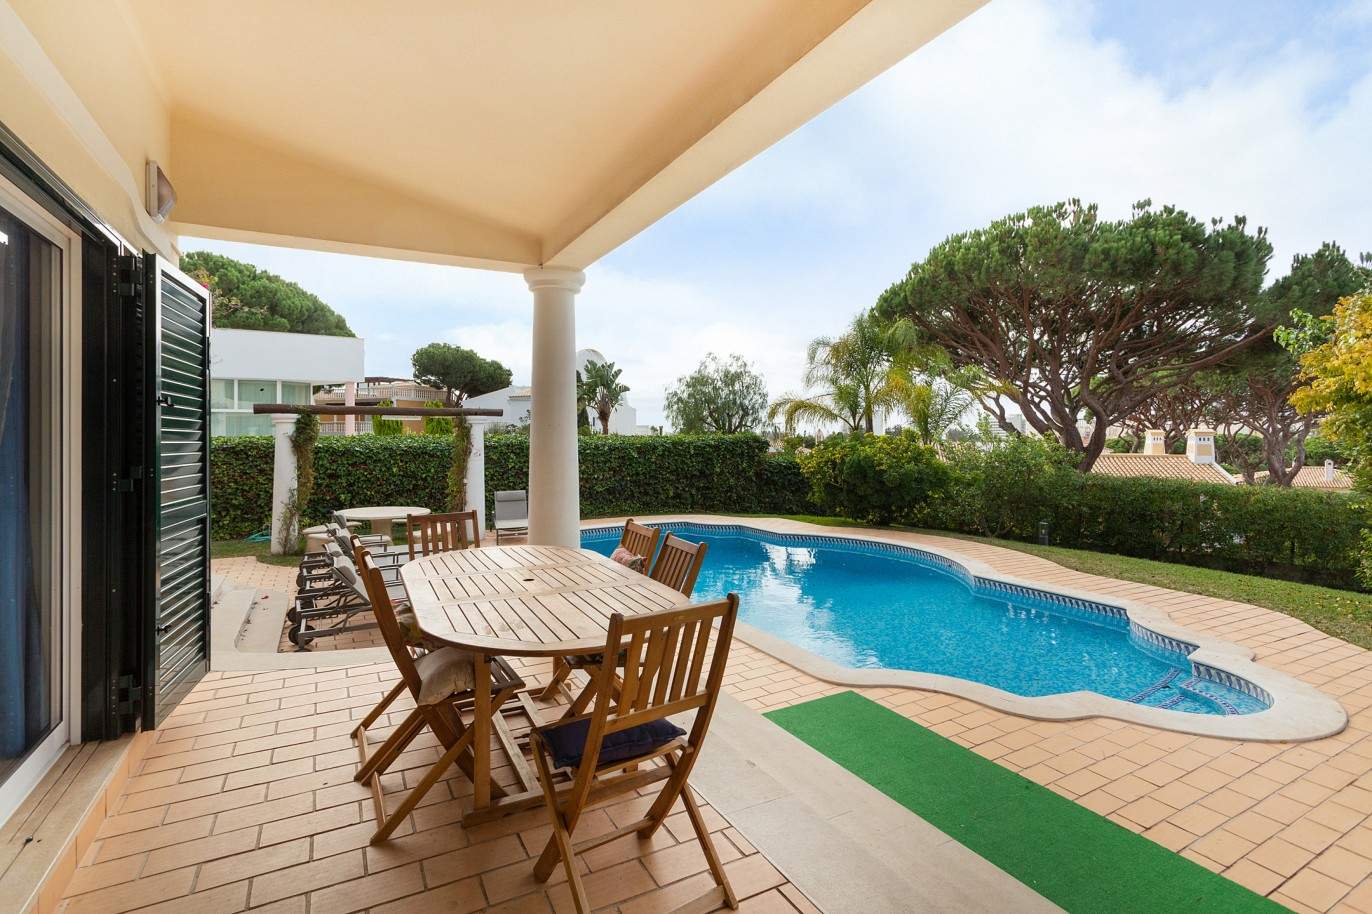 Moradia V5 com piscina, para venda em Vilamoura, Algarve_212565